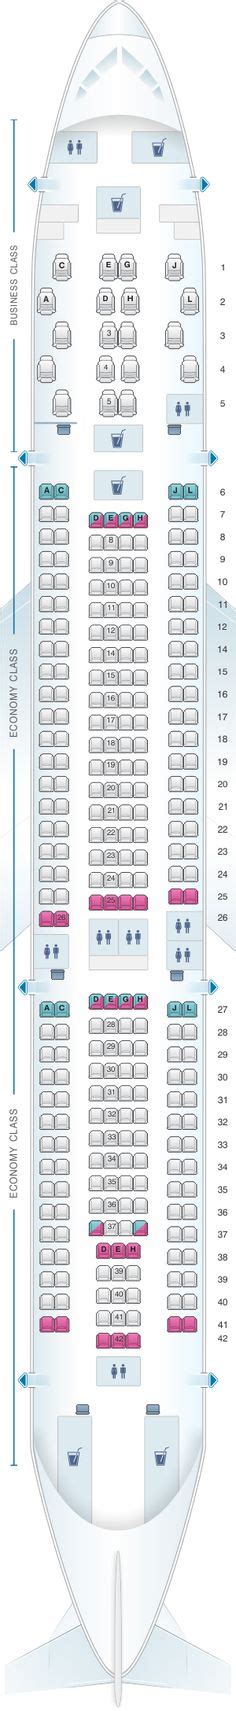 Iberia A320 Seat Map